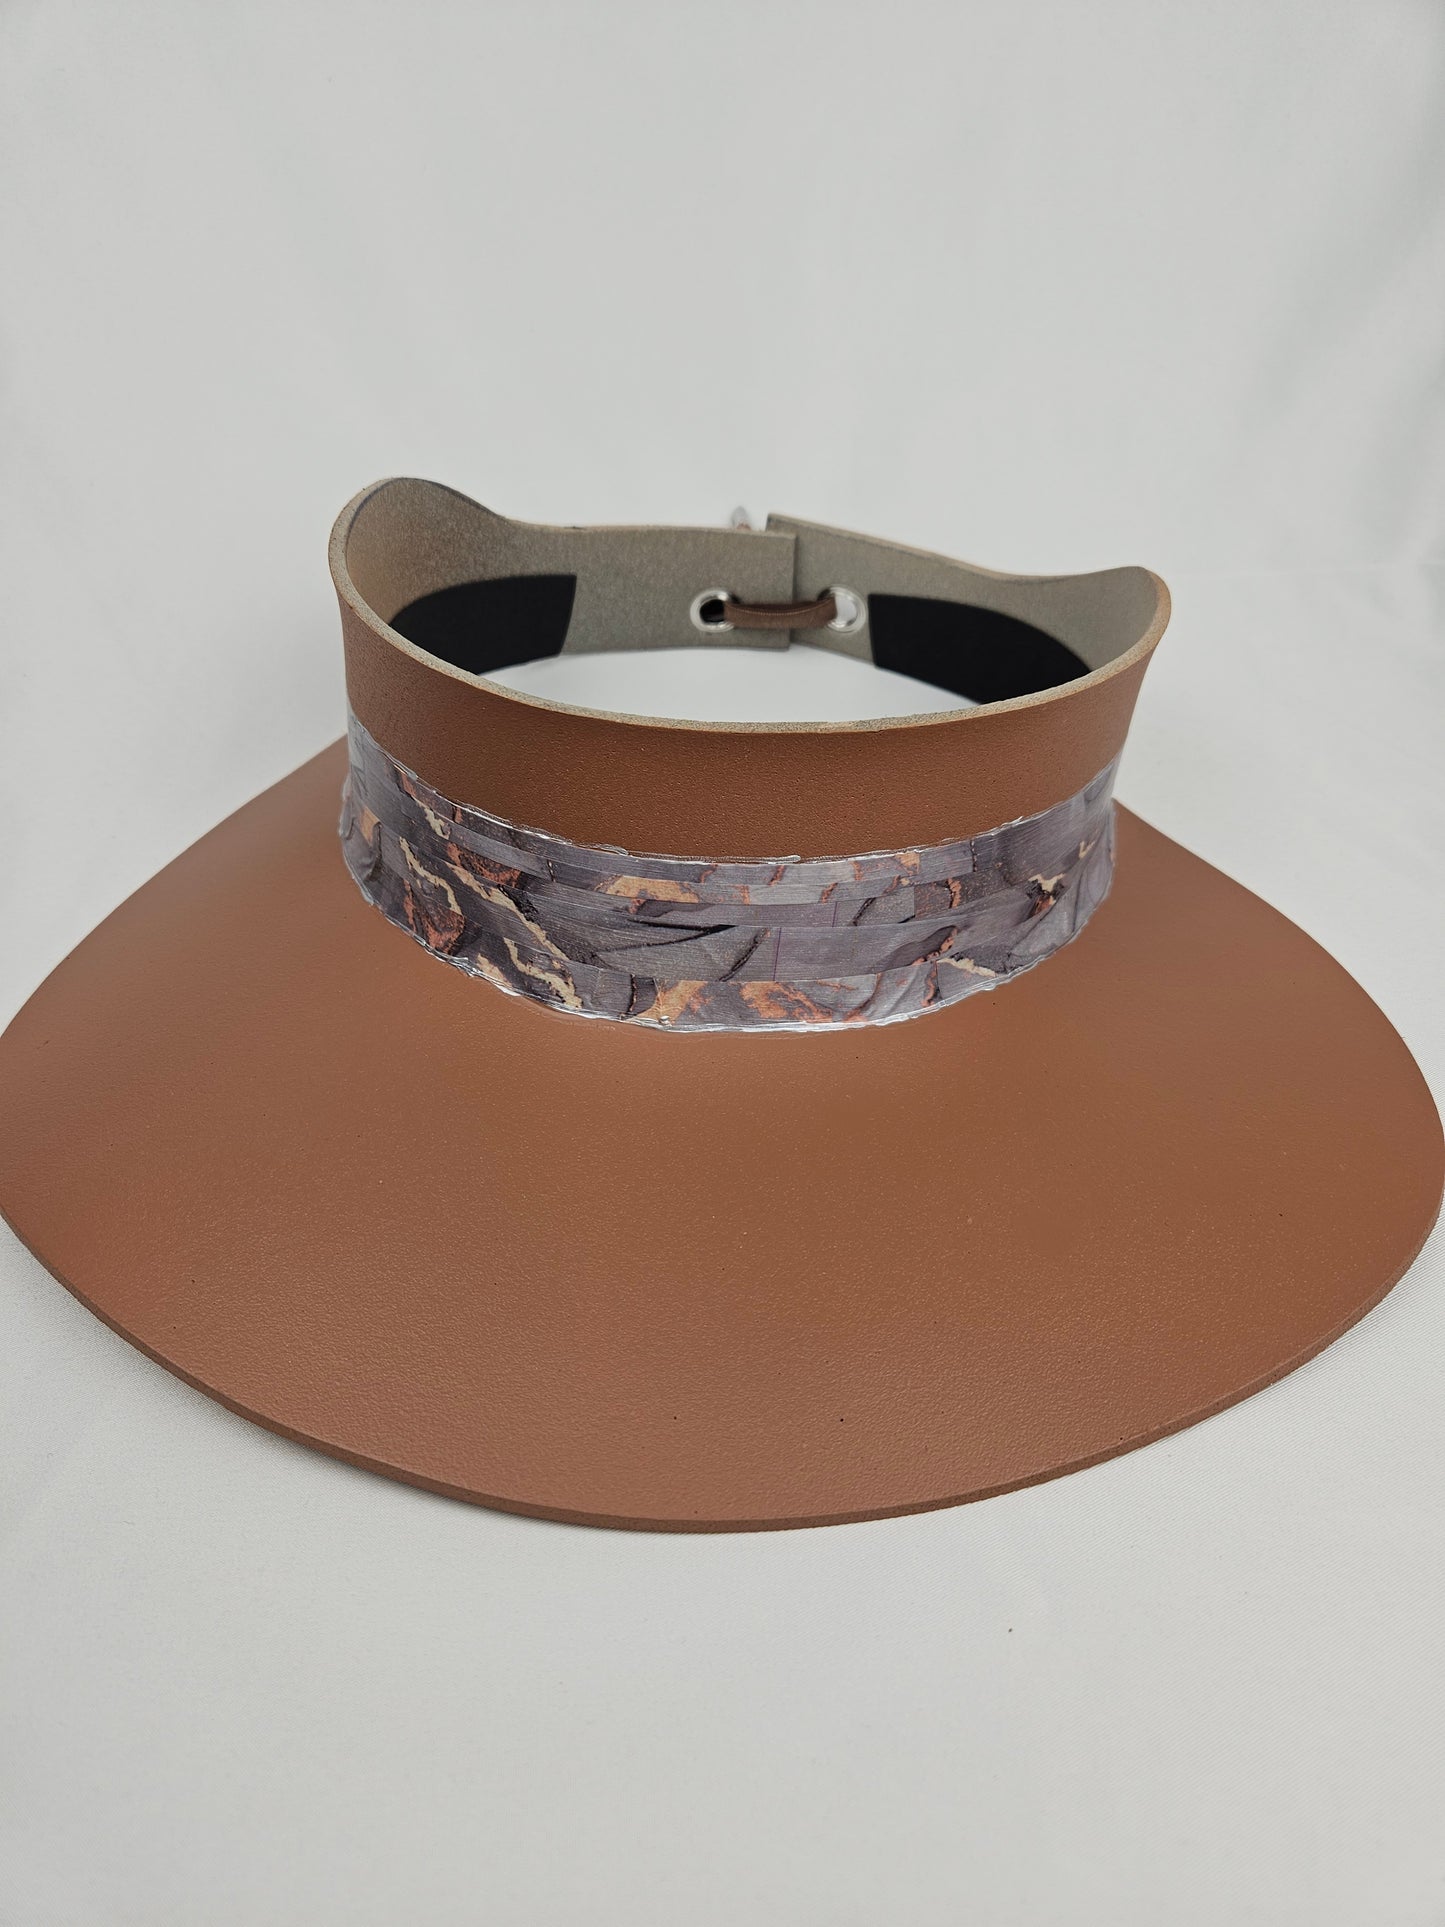 Caramel Brown Audrey Sun Visor Hat with Stylish Marbled Gray Blue Band: UV Resistant, Walks, 1950s, Brunch, Tea, Golf, Wedding, Church, No Headache, Easter, Pool, Beach, Big Brim